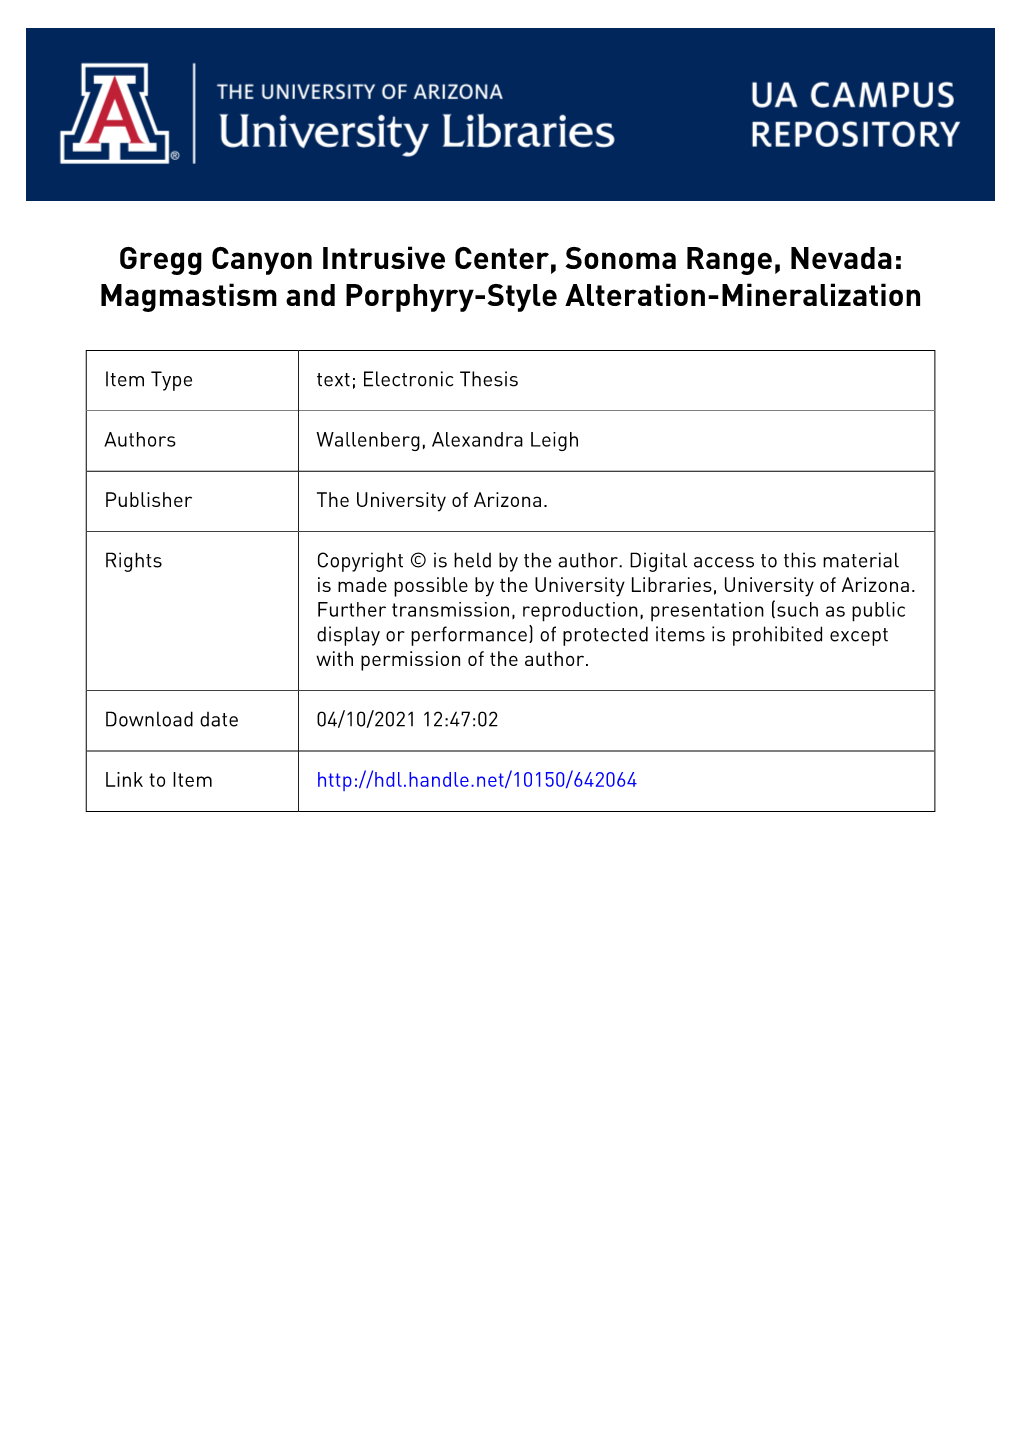 Gregg Canyon Intrusive Center, Sonoma Range, Nevada: Magmastism and Porphyry-Style Alteration-Mineralization